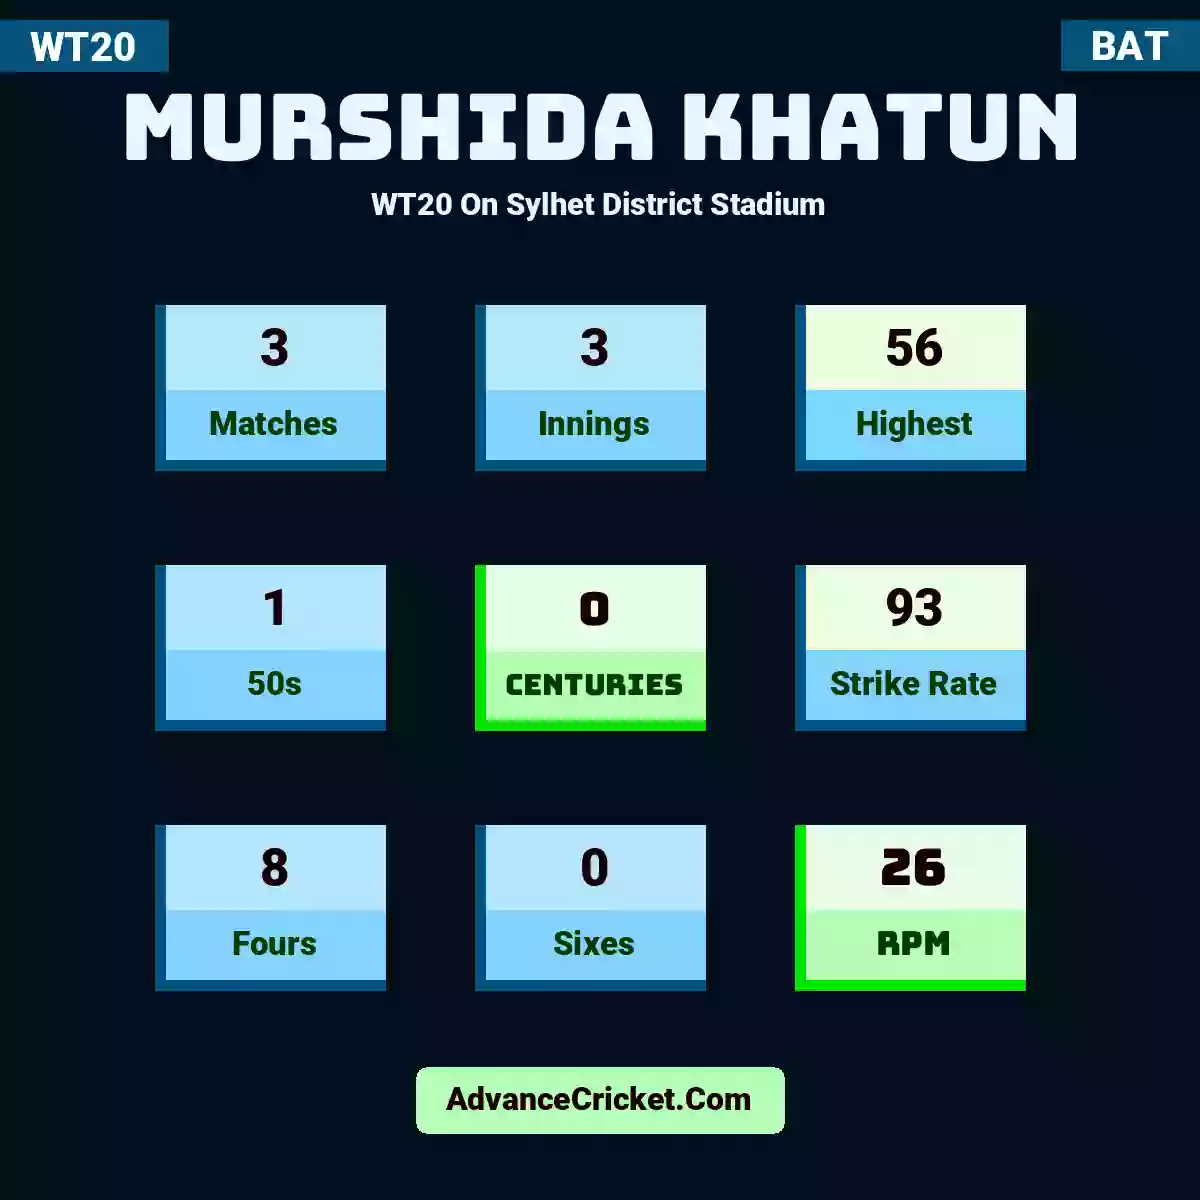 Murshida Khatun WT20  On Sylhet District Stadium, Murshida Khatun played 3 matches, scored 56 runs as highest, 1 half-centuries, and 0 centuries, with a strike rate of 93. M.Khatun hit 8 fours and 0 sixes, with an RPM of 26.